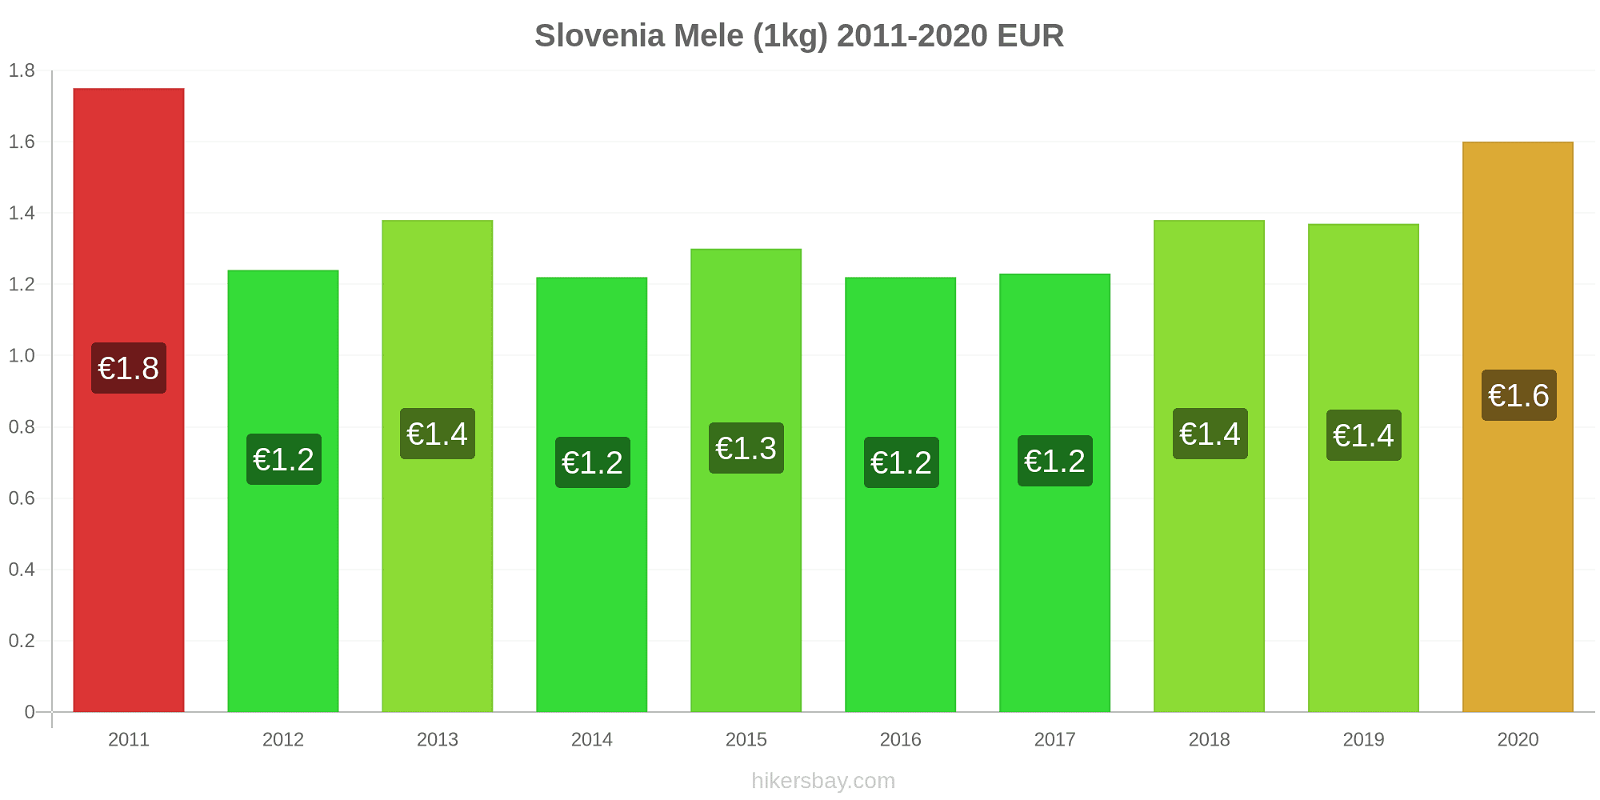 Slovenia variazioni di prezzo Mele (1kg) hikersbay.com